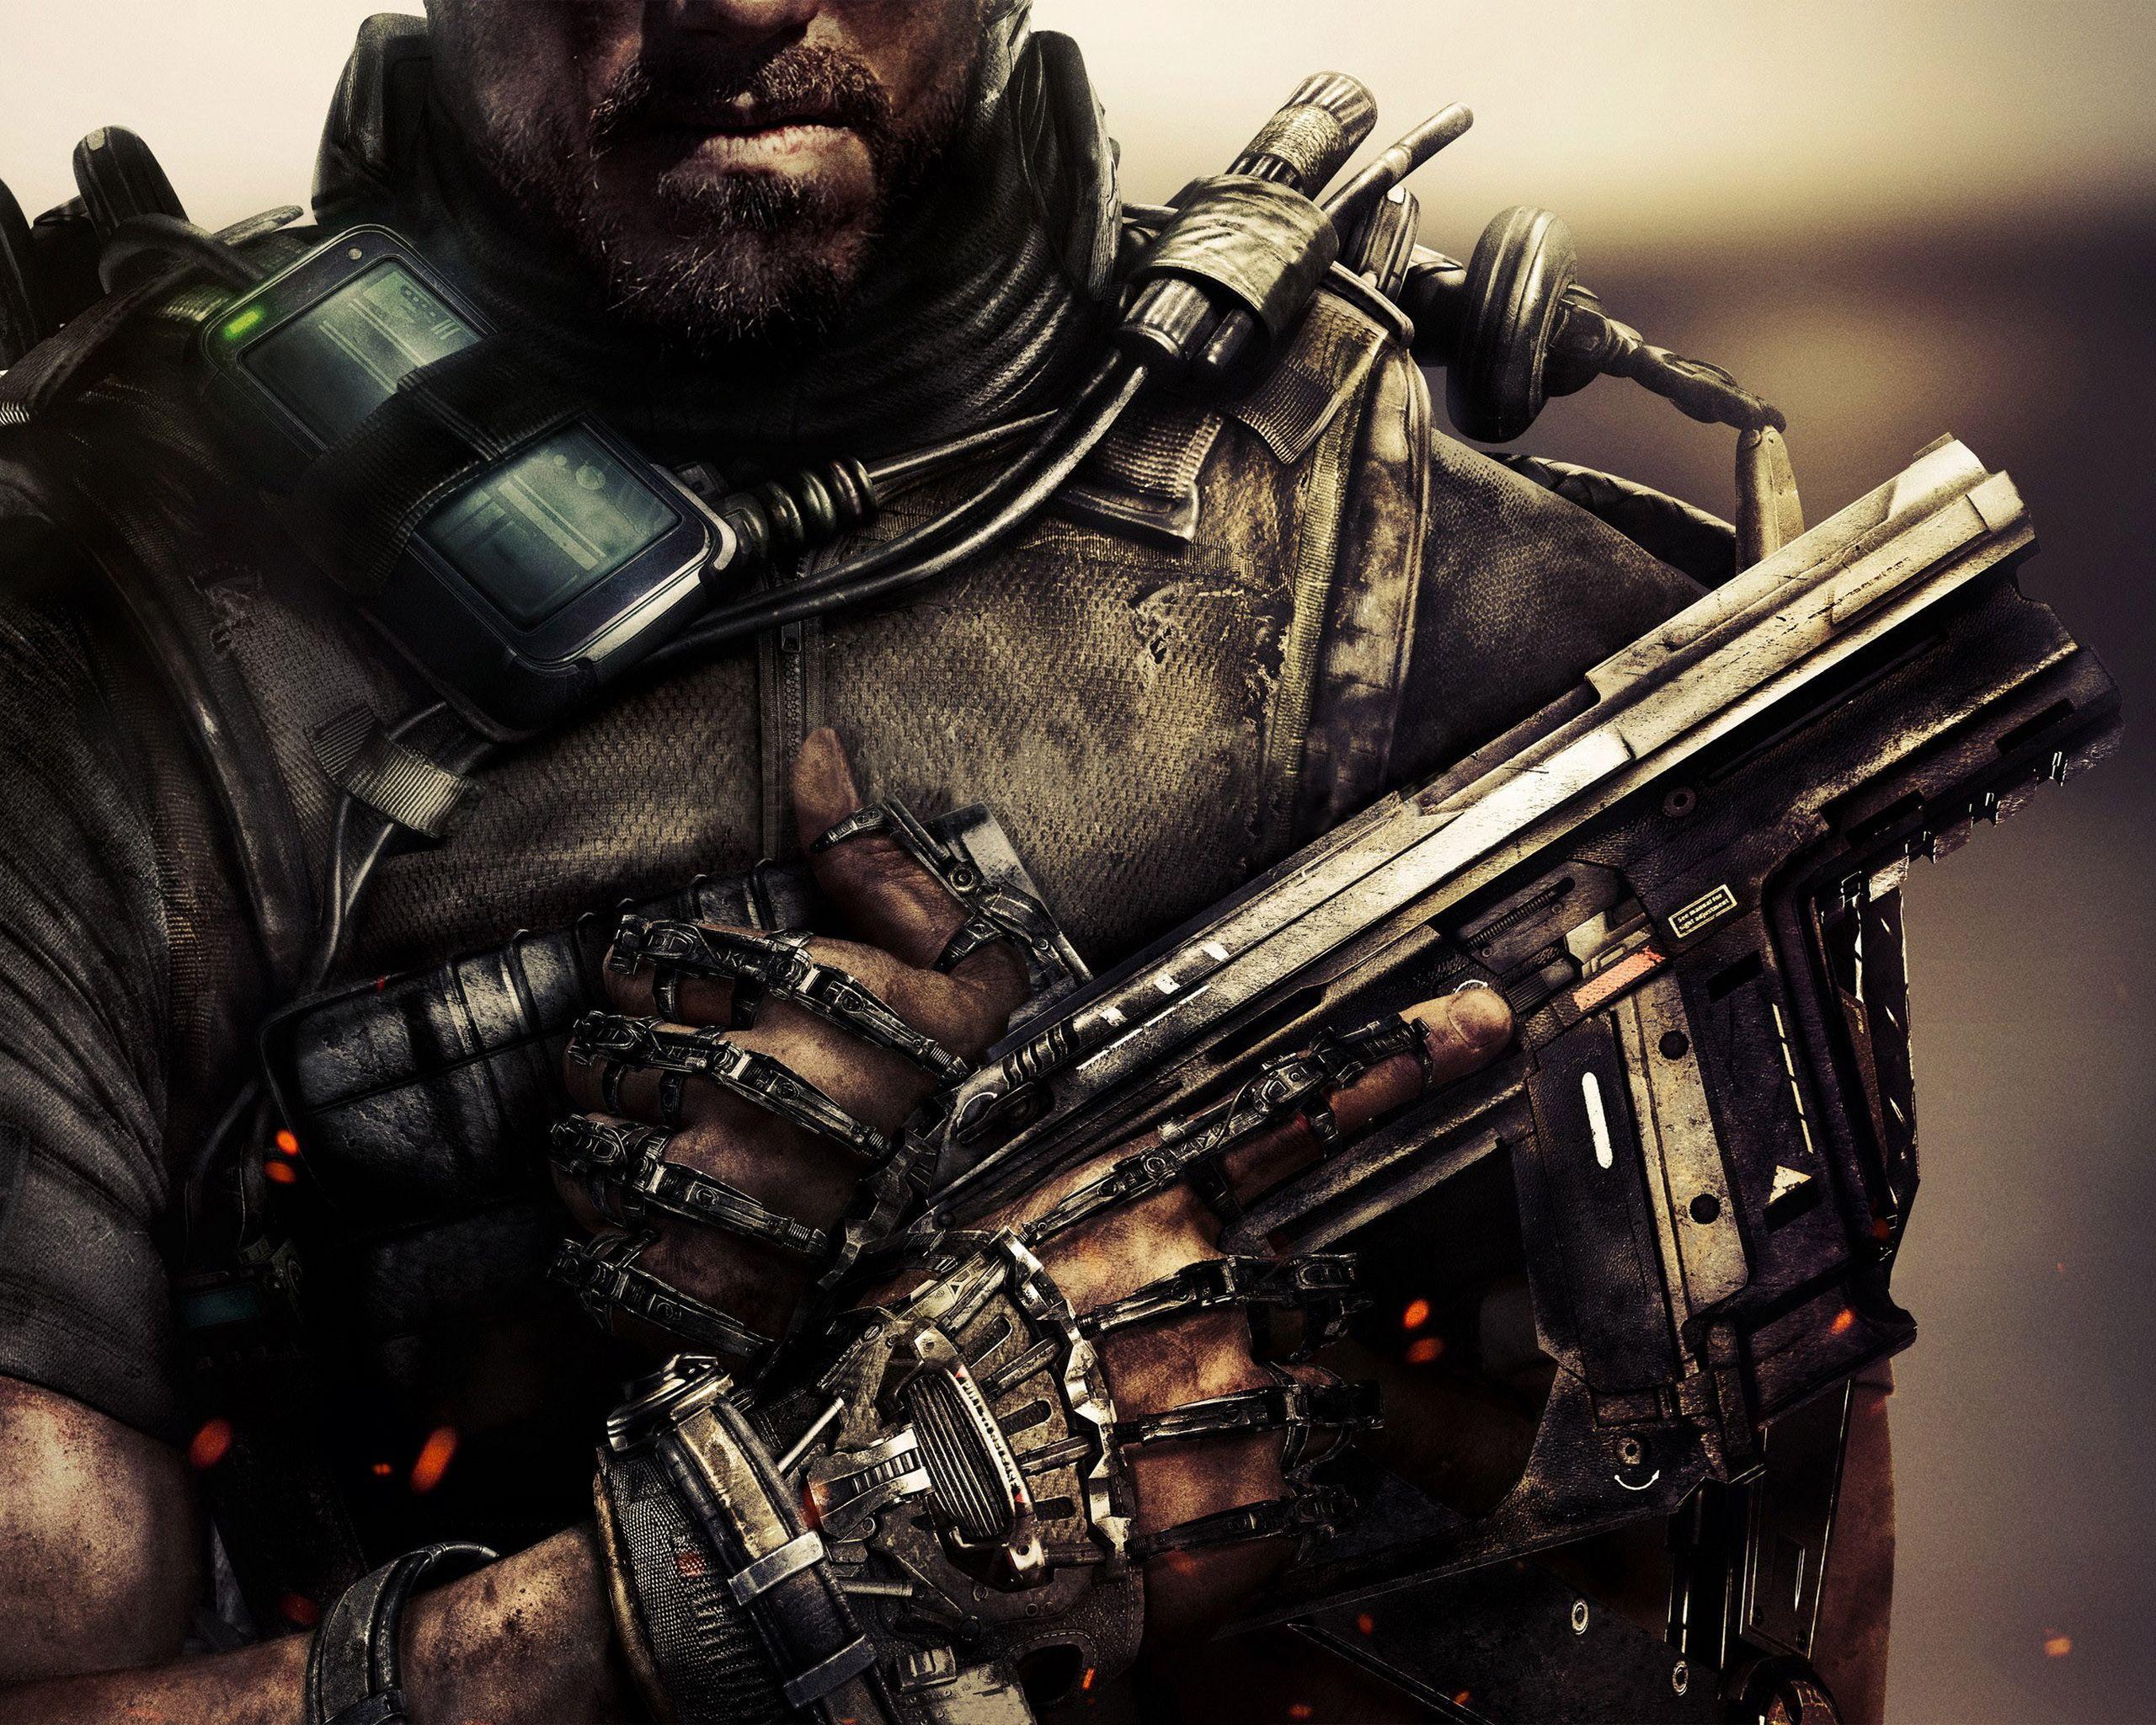 Call Of Duty Advanced Warfare Wallpaper